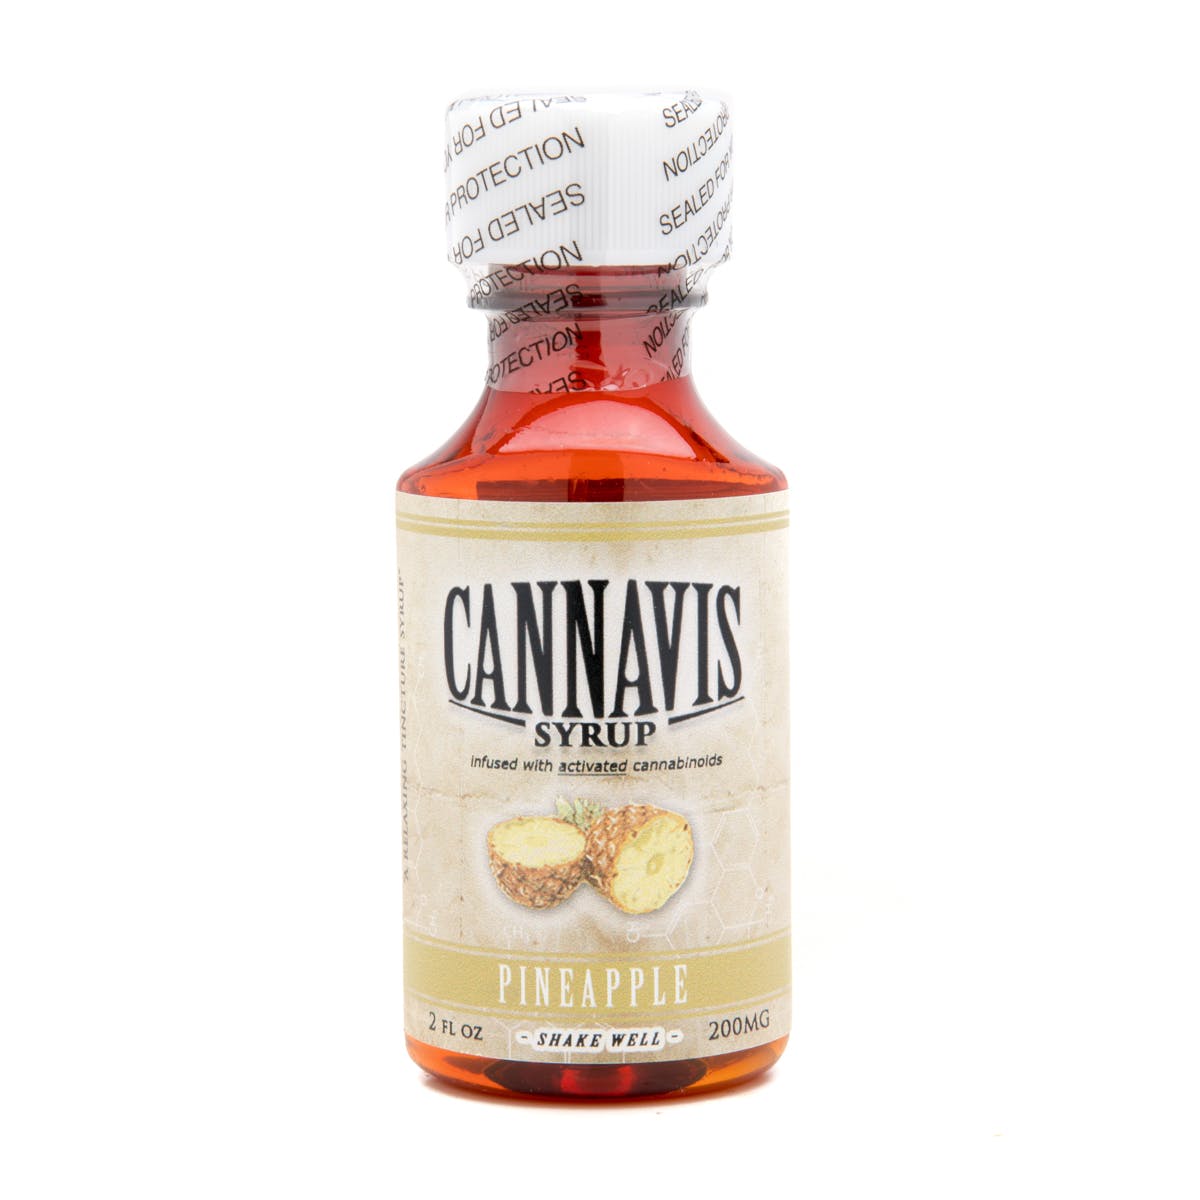 marijuana-dispensaries-west-coast-collective-in-los-angeles-cannavis-syrup-2c-pineapple-200mg